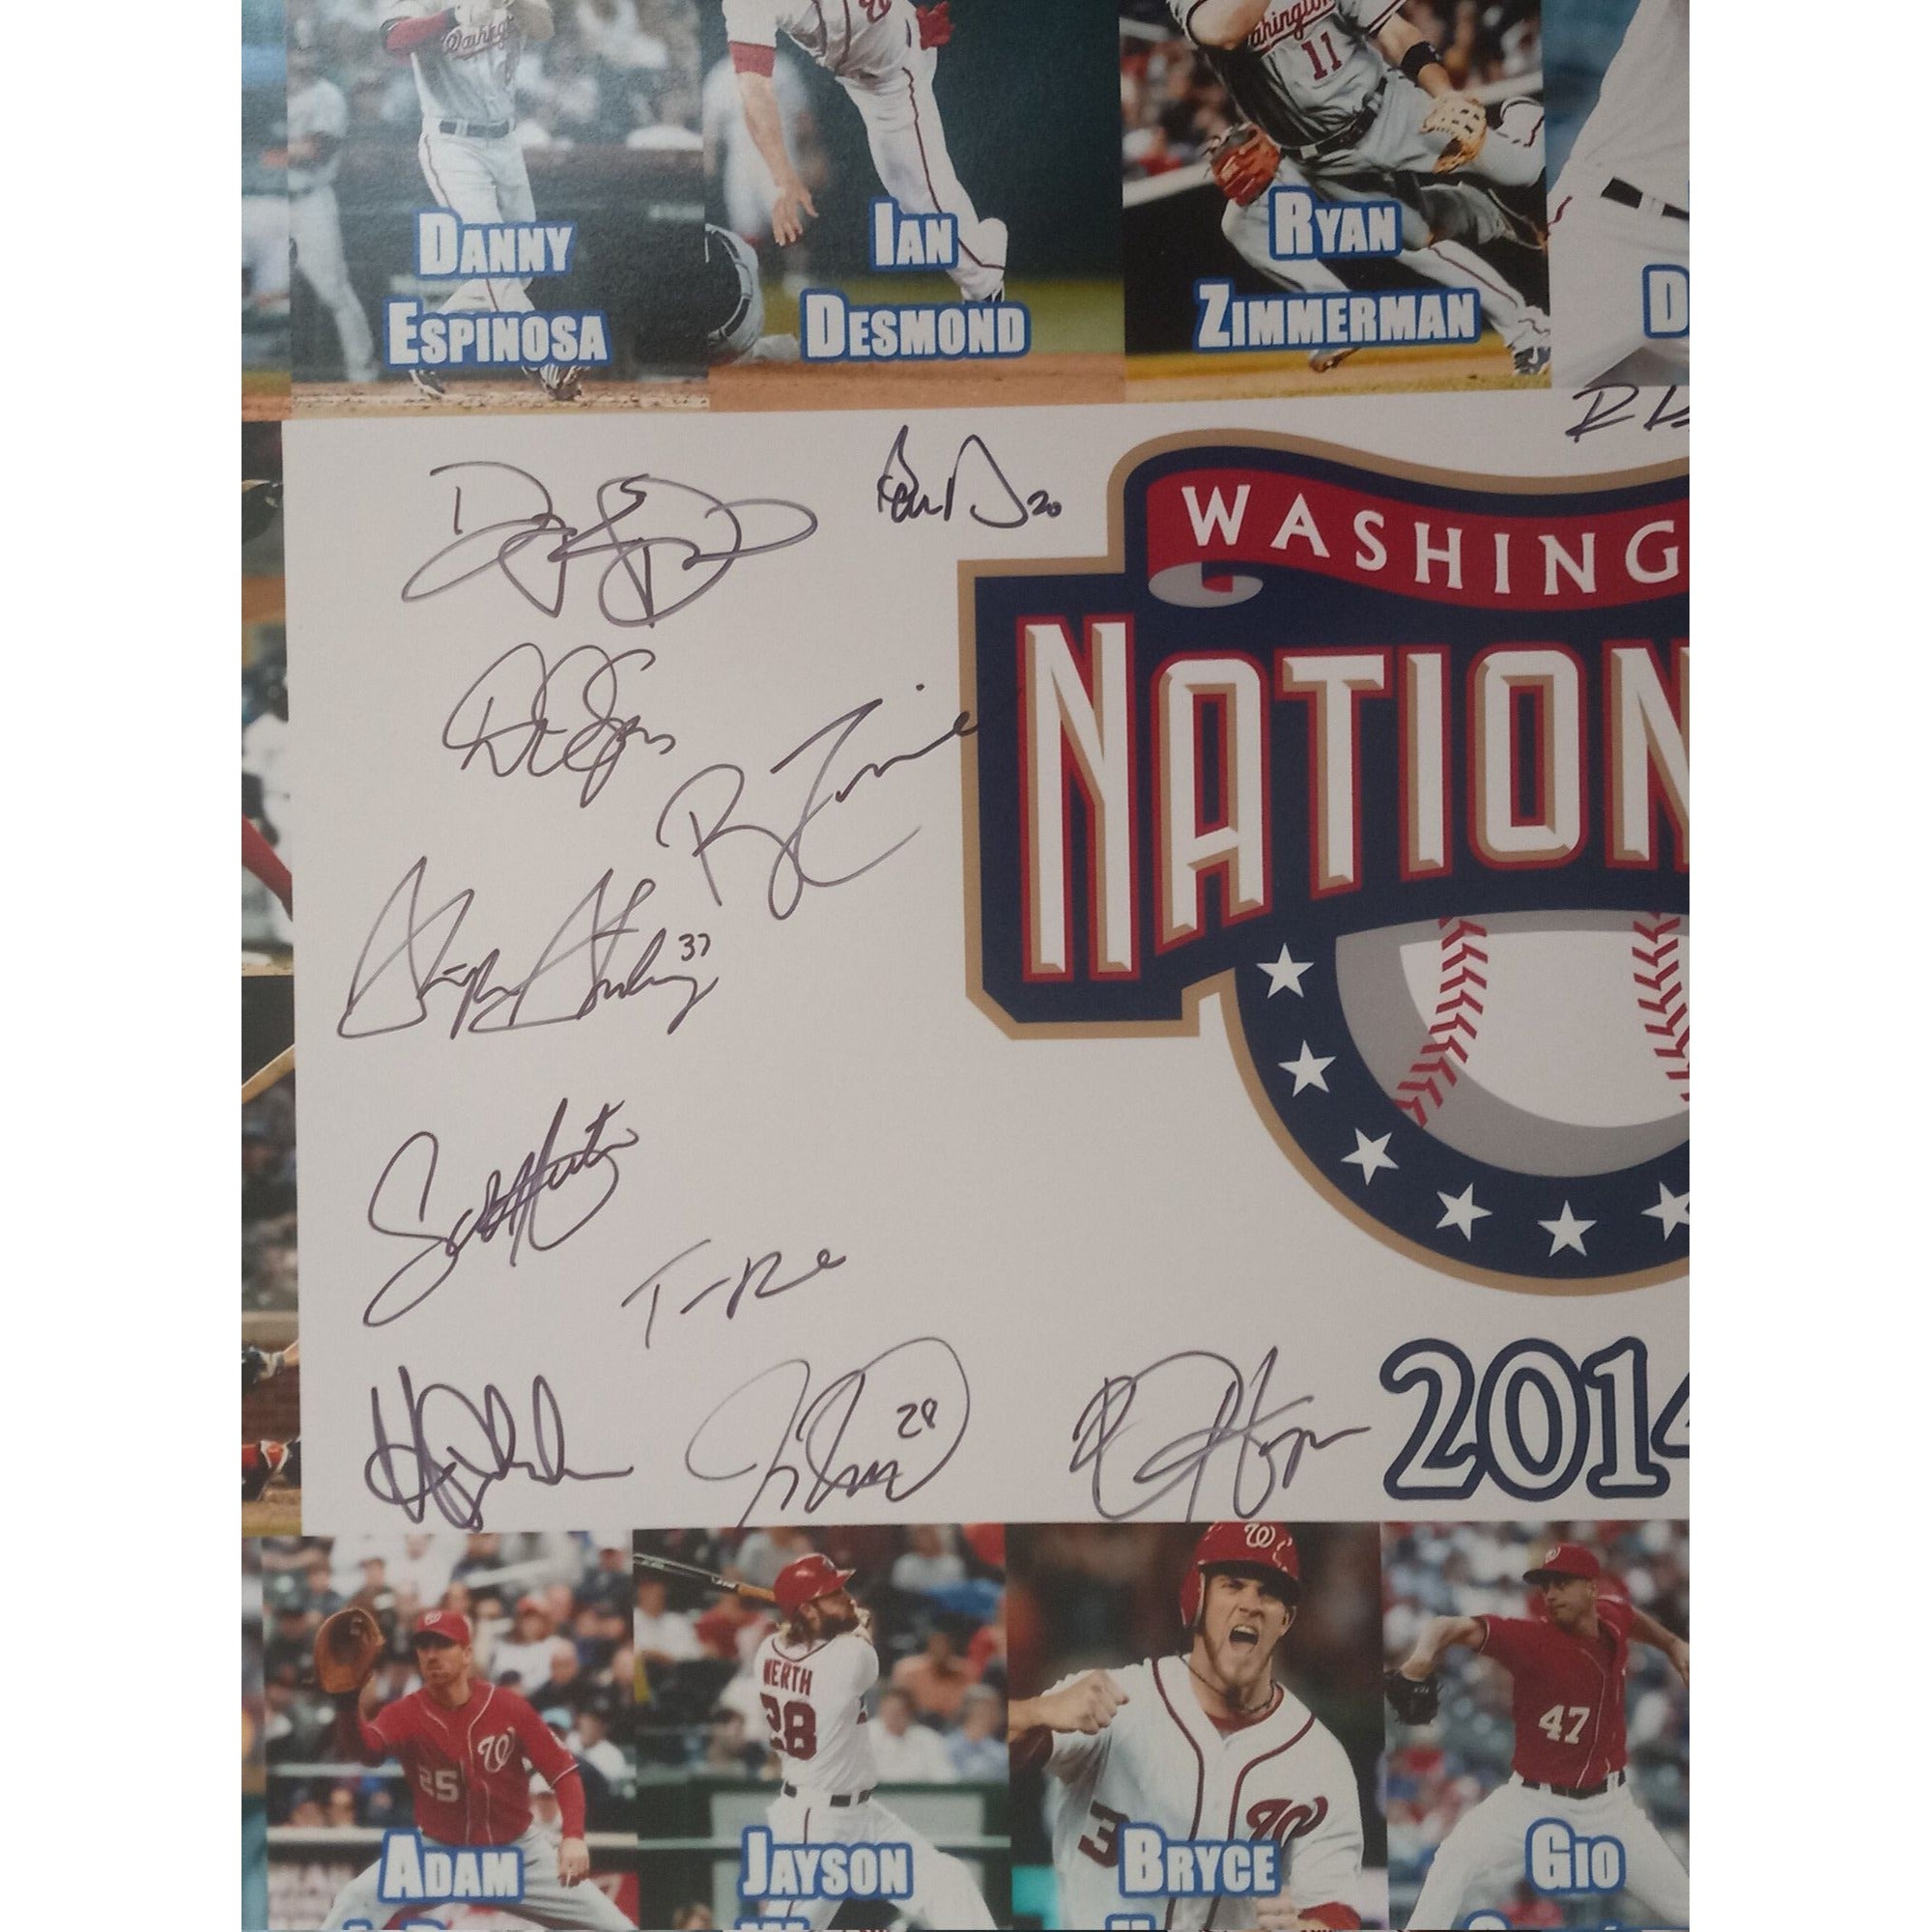 Washington Nationals Bryce Harper, Stephen Strasburg 2014 team signed 20x30 photo with proof